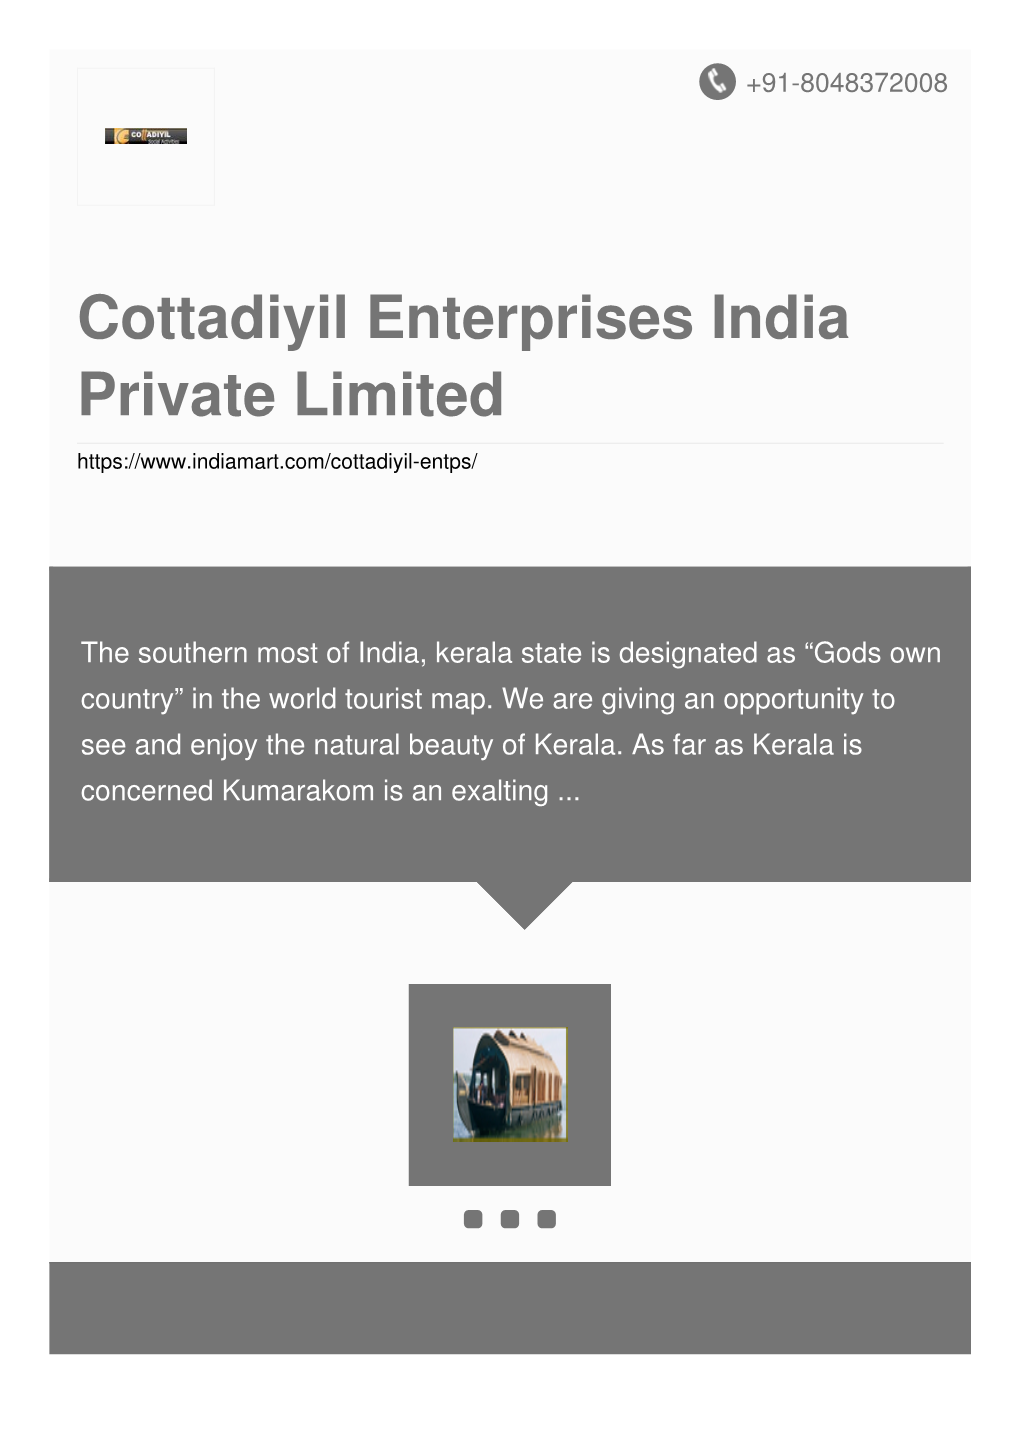 Cottadiyil Enterprises India Private Limited